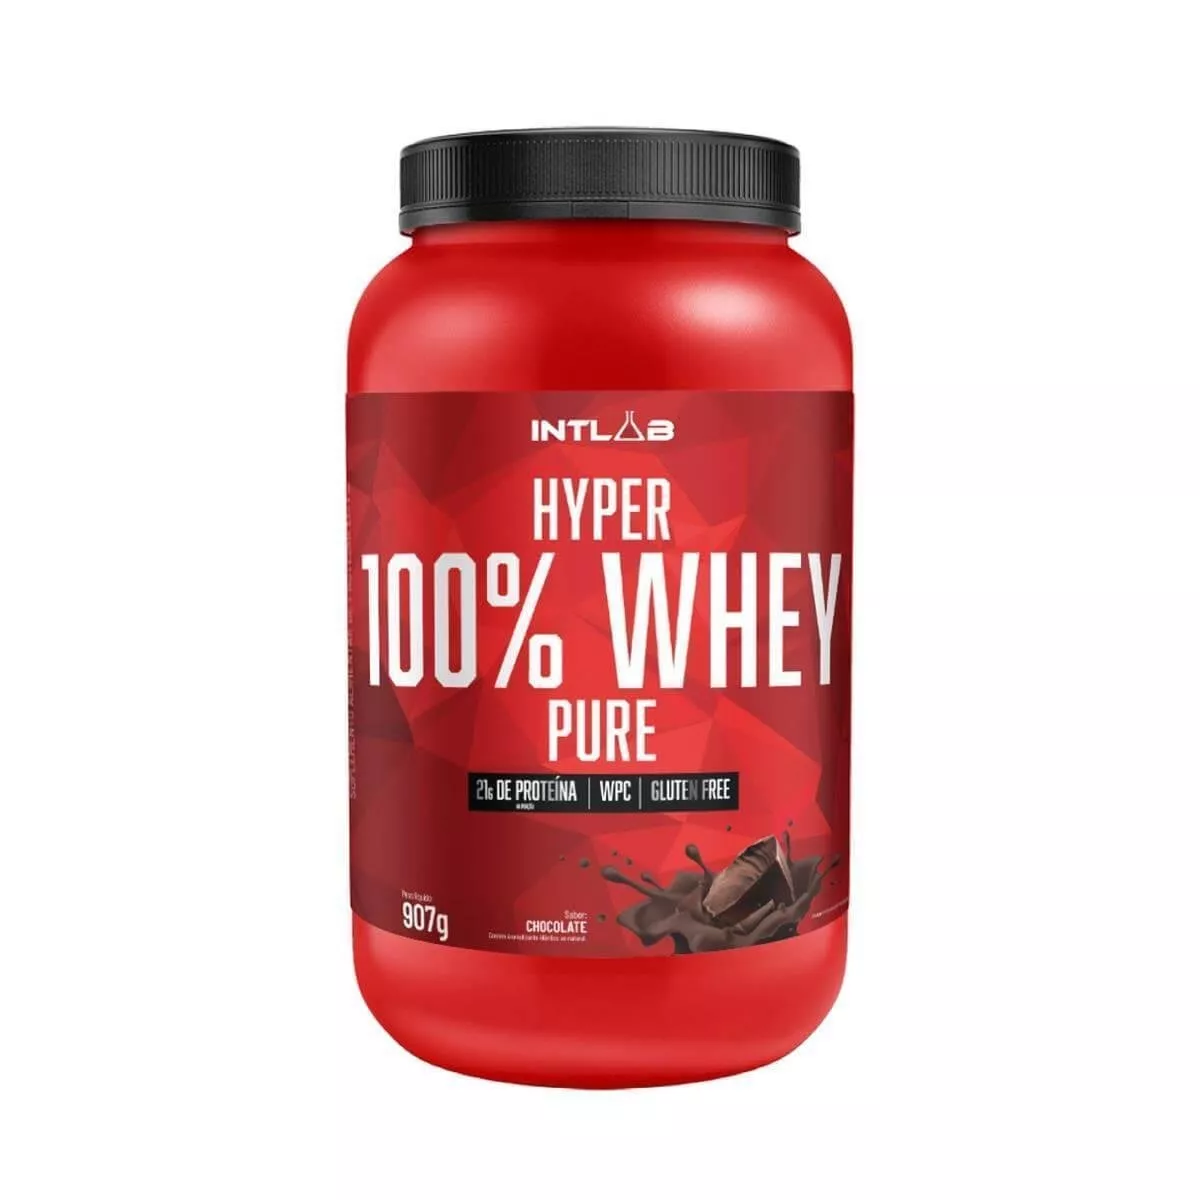 Hyper Whey 100% Pure (907g) - Intlab